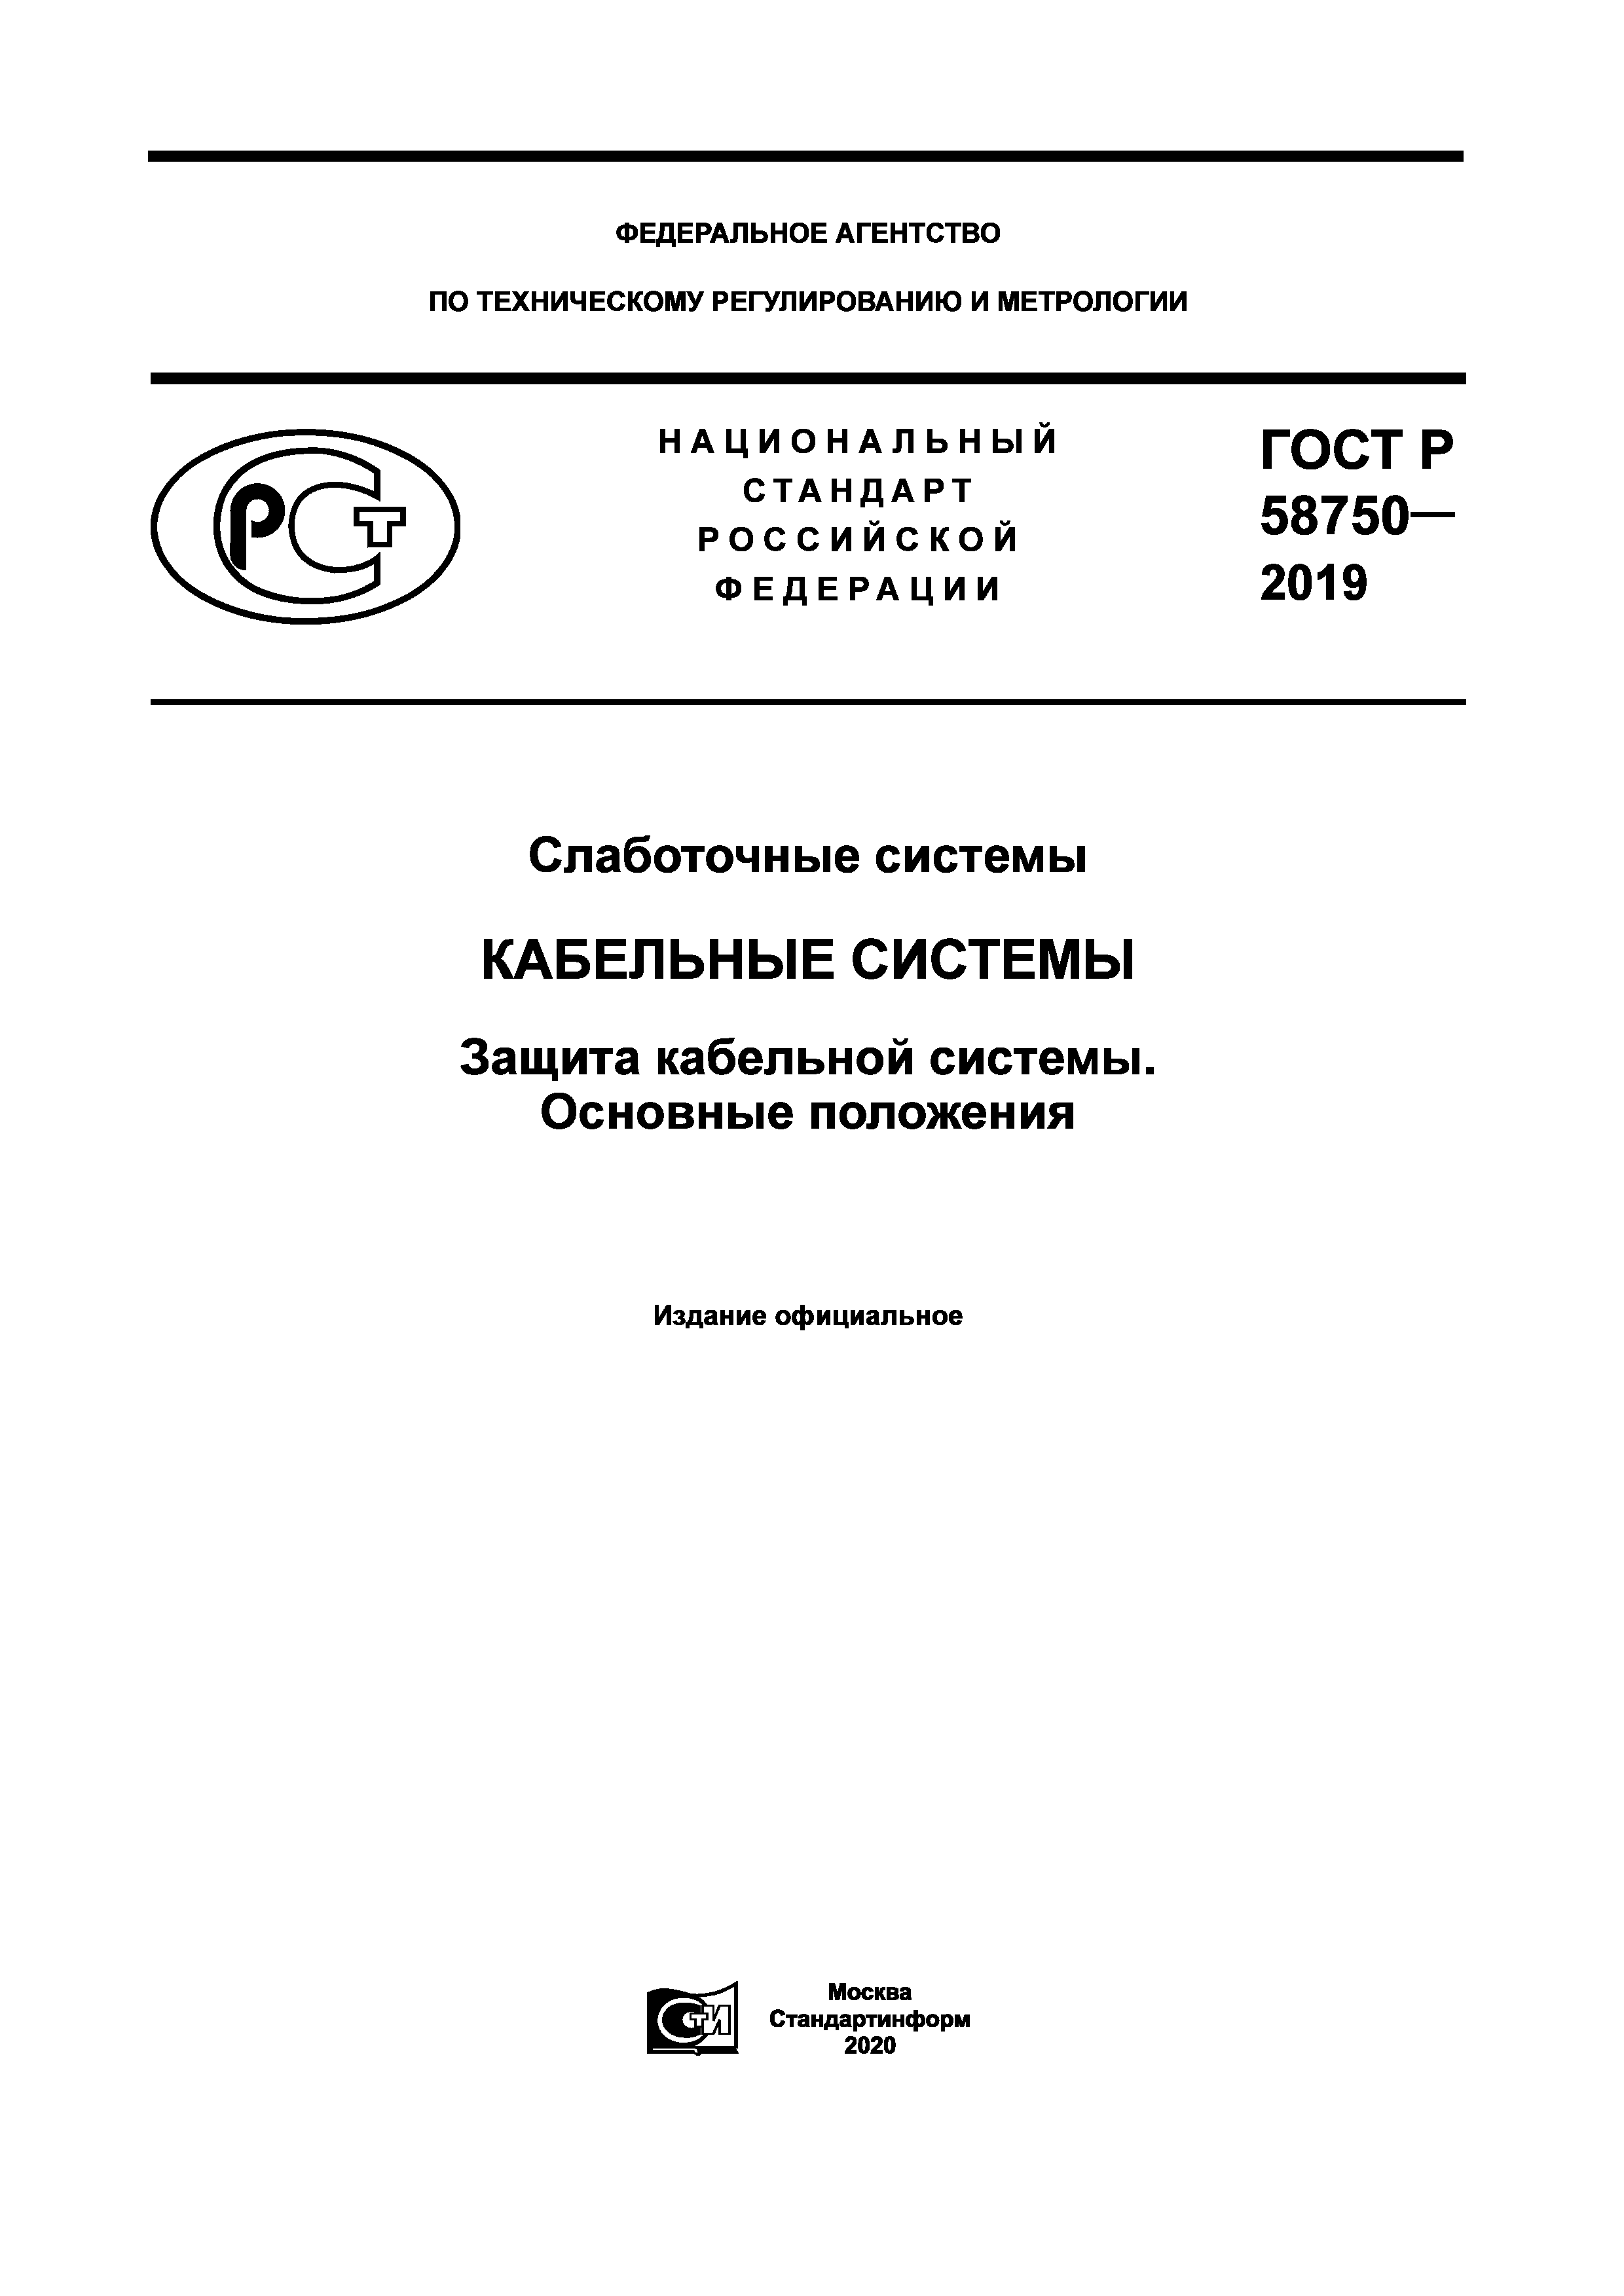 ГОСТ Р 58750-2019